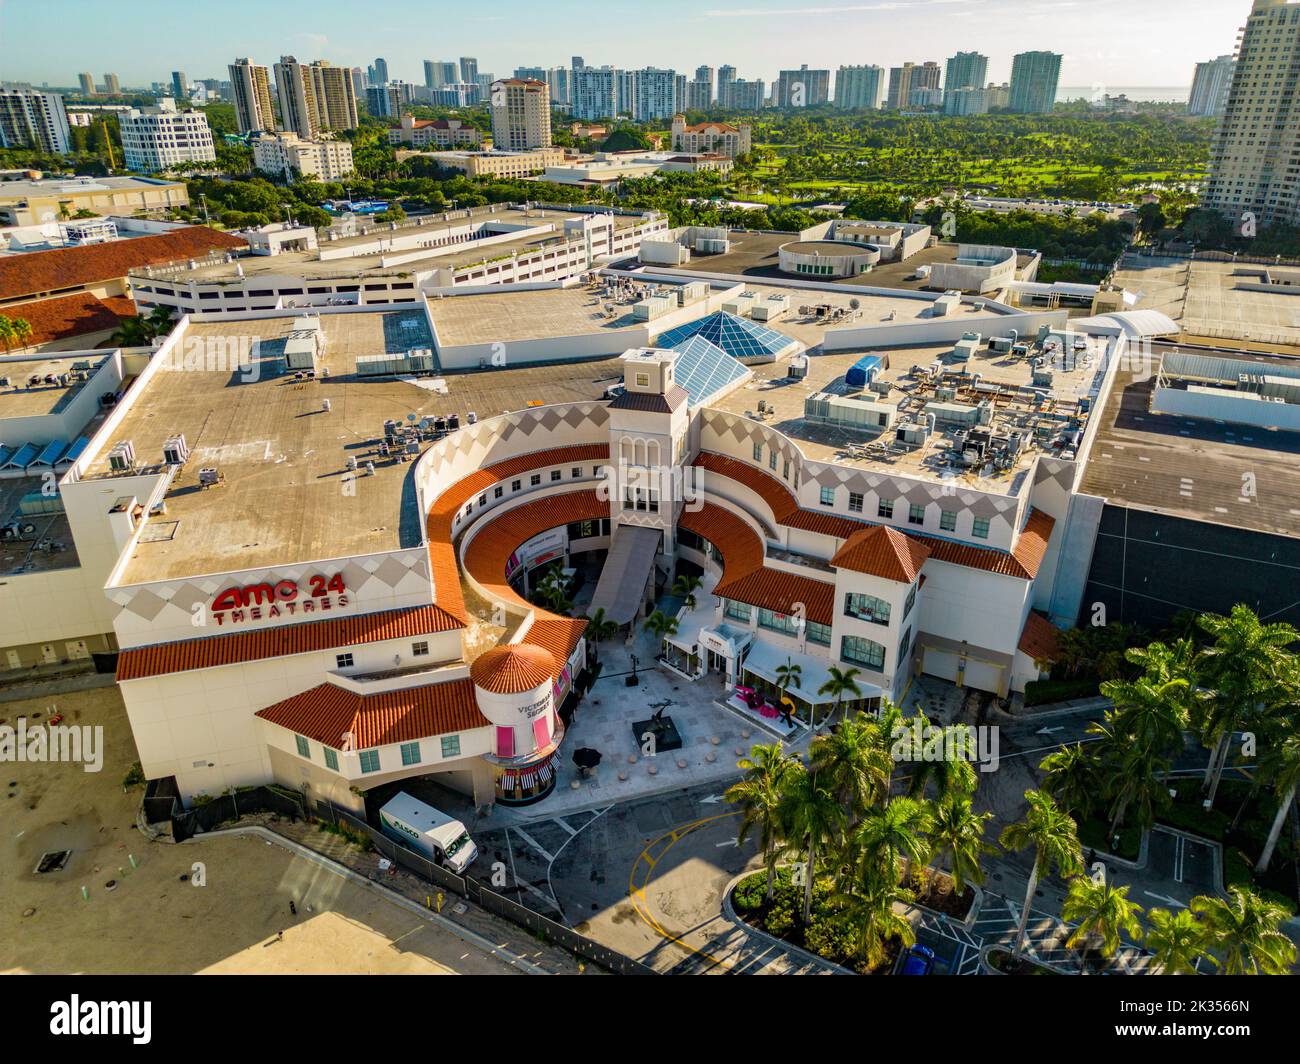 SkyMall : Retail History and Abandoned Airports: Aventura Mall, Aventura  (Miami), FL